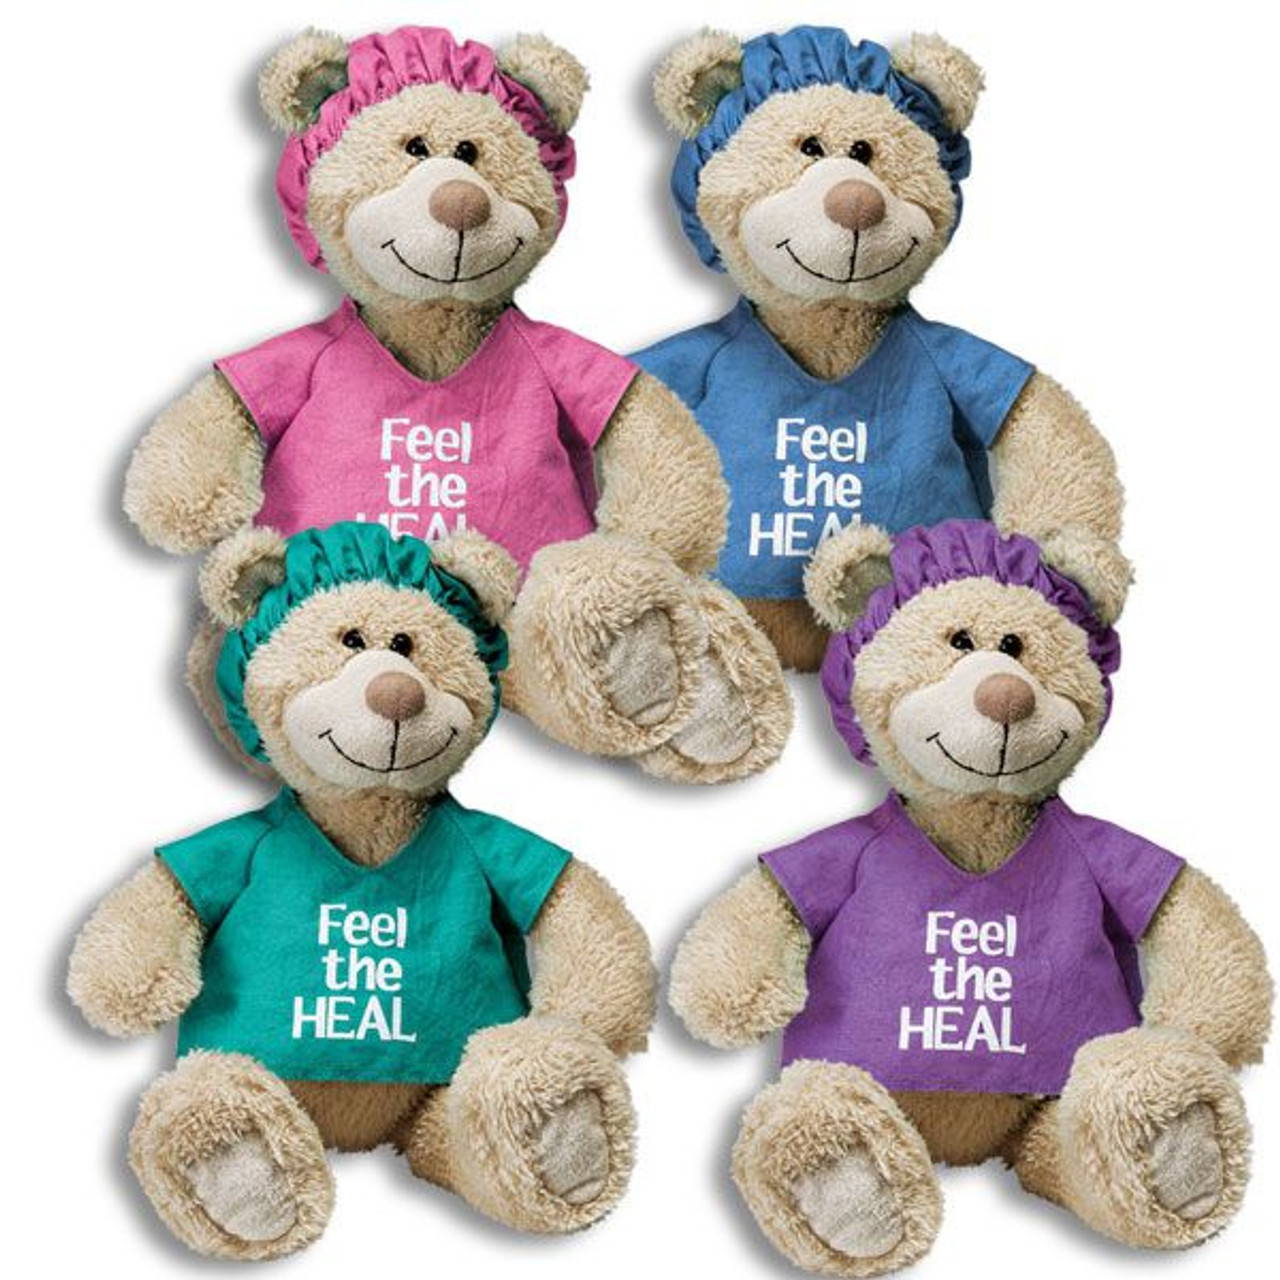 12-Inch Feel the Heal Plush Teddy Bear